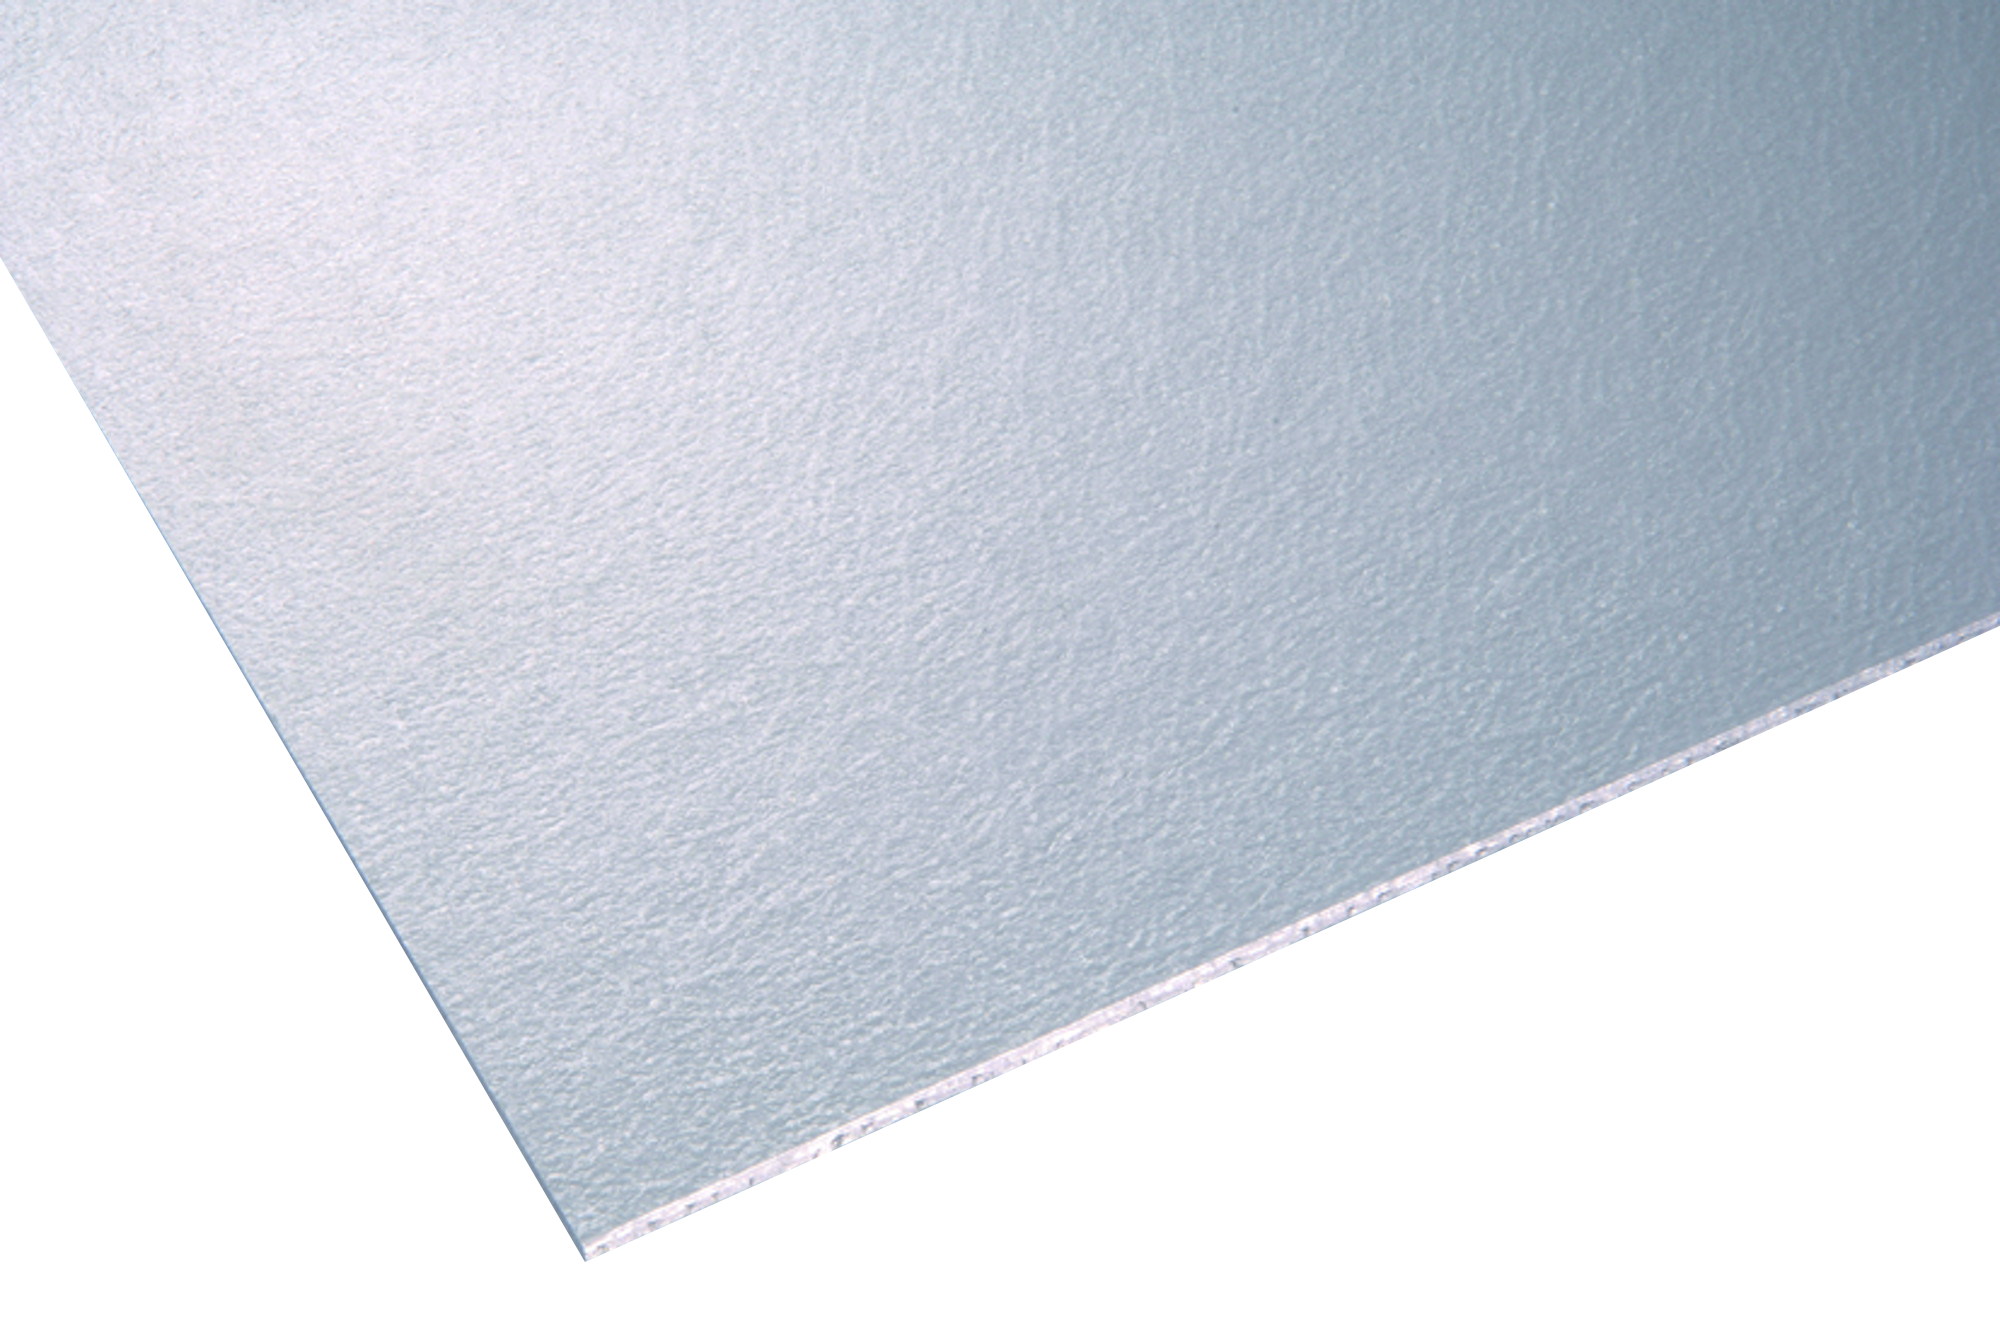 Metacrilato transparente relieve de 2.5 mm de grosor y 100x50cm